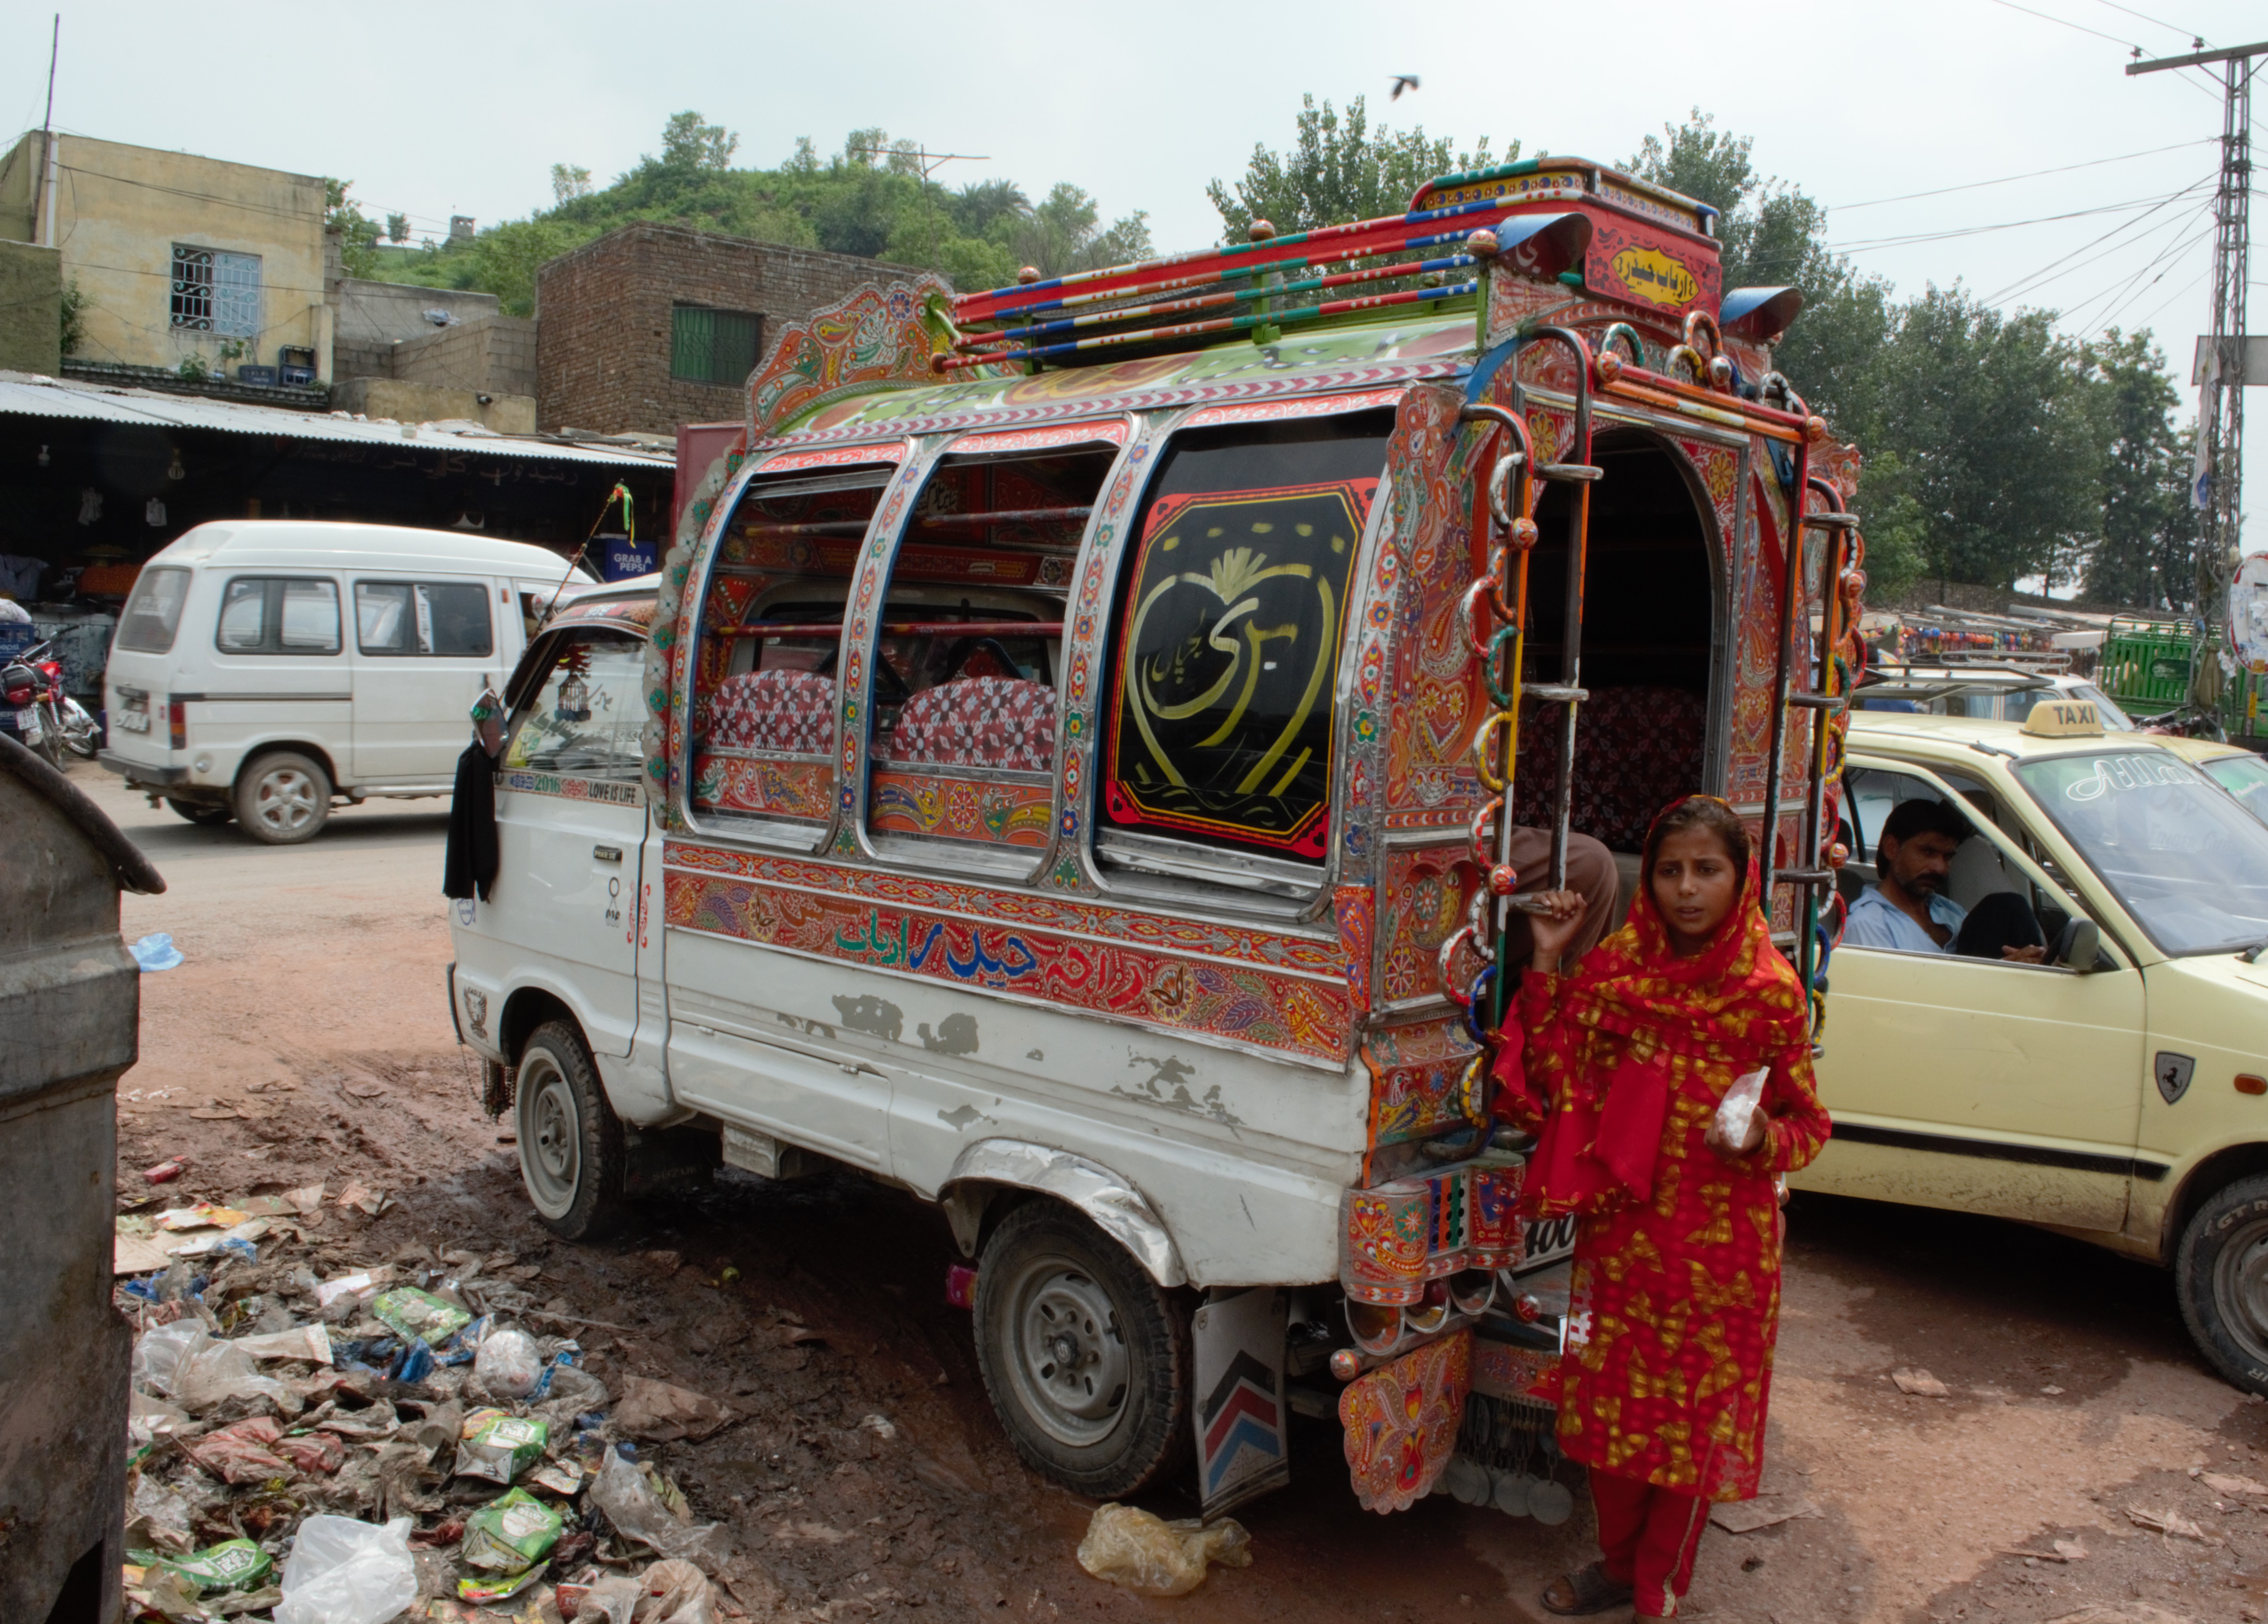 Street Seller near Taxi, Islamabad, Pakistan, ©Fran Smulcheski